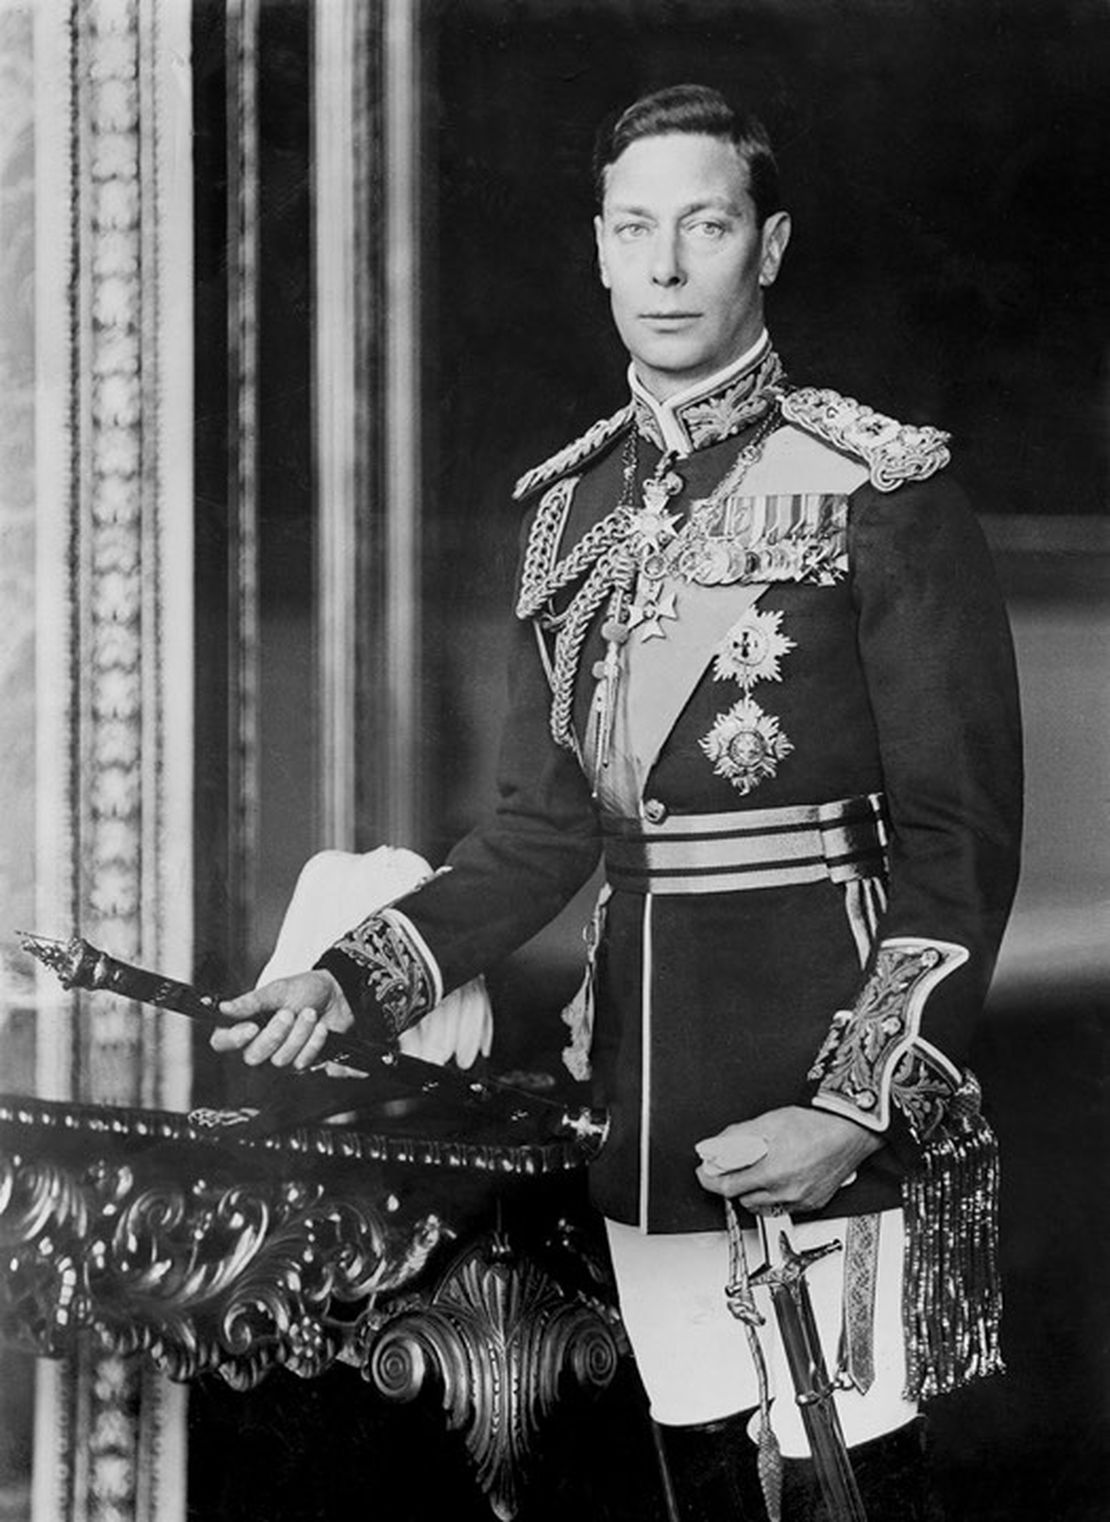 King George VI dies and Queen Elizabeth II becomes monarch